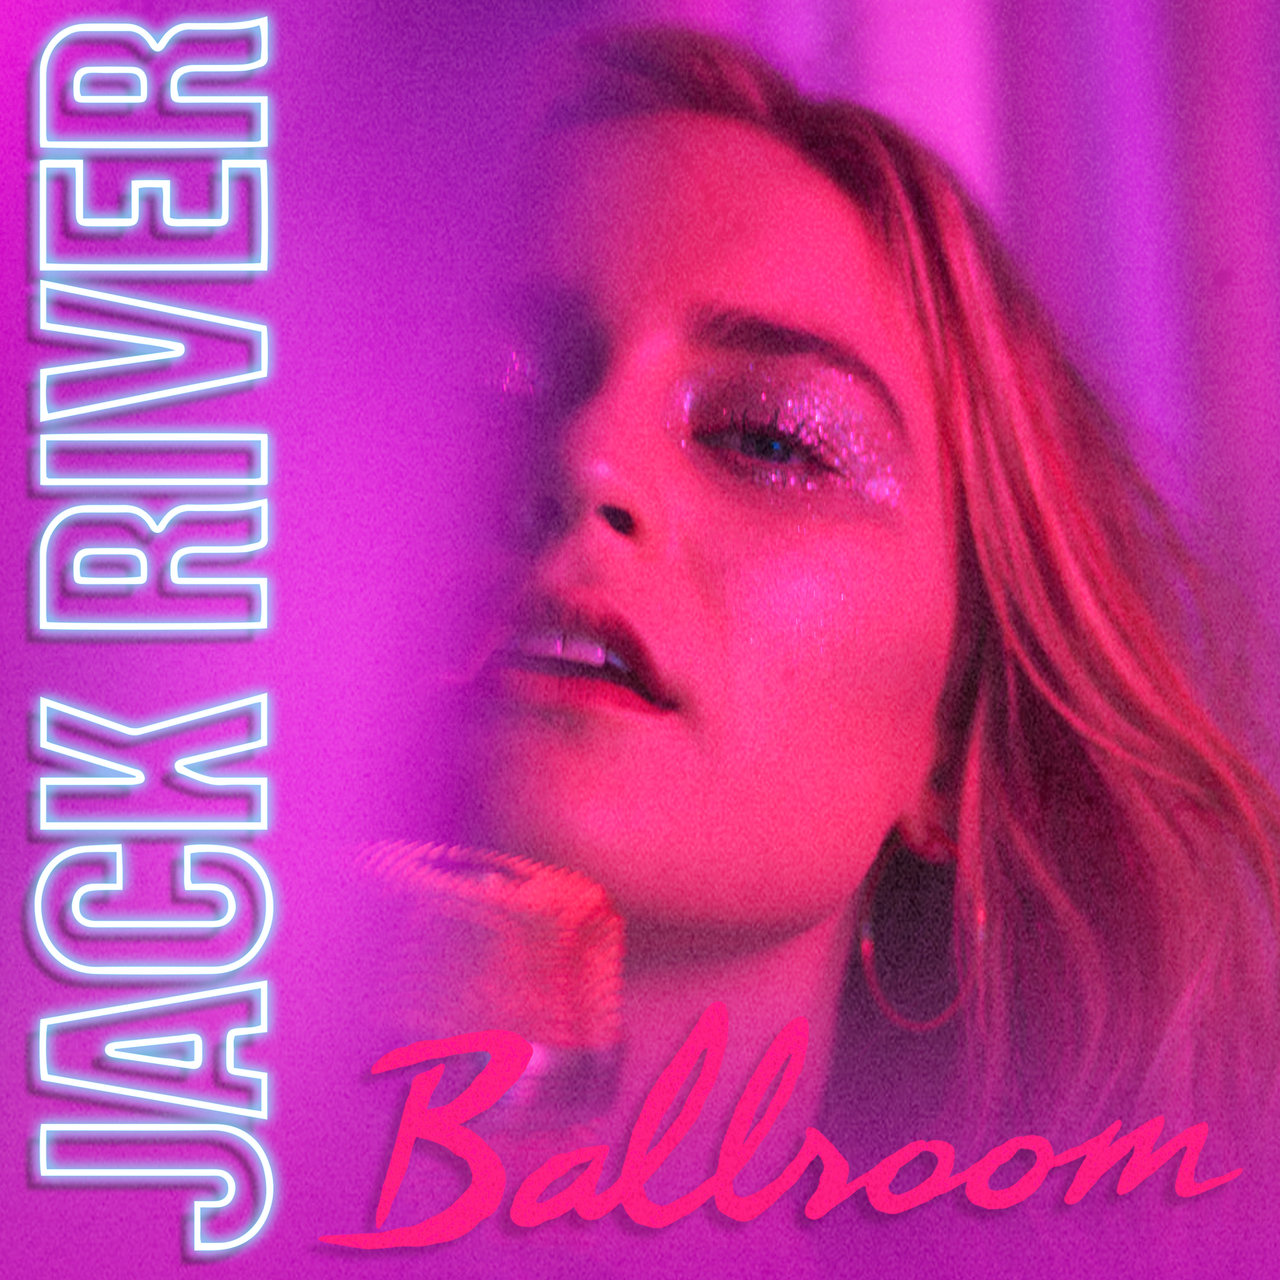 Jack River — Ballroom cover artwork